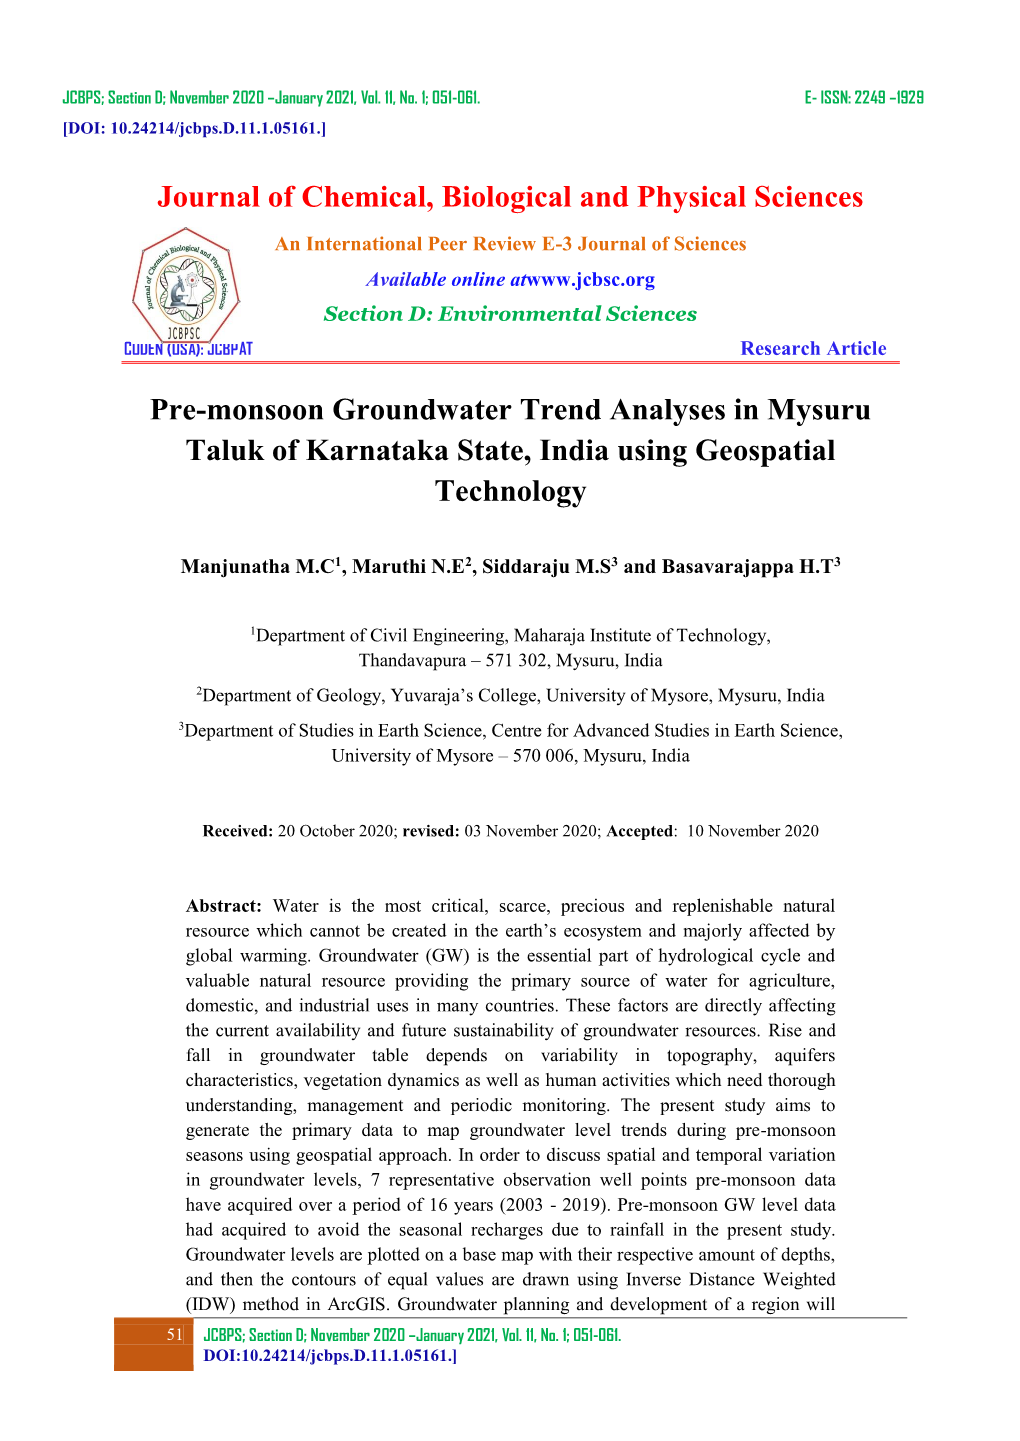 Pre-Monsoon Groundwater Trend Analyses in Mysuru Taluk of Karnataka State, India Using Geospatial Technology